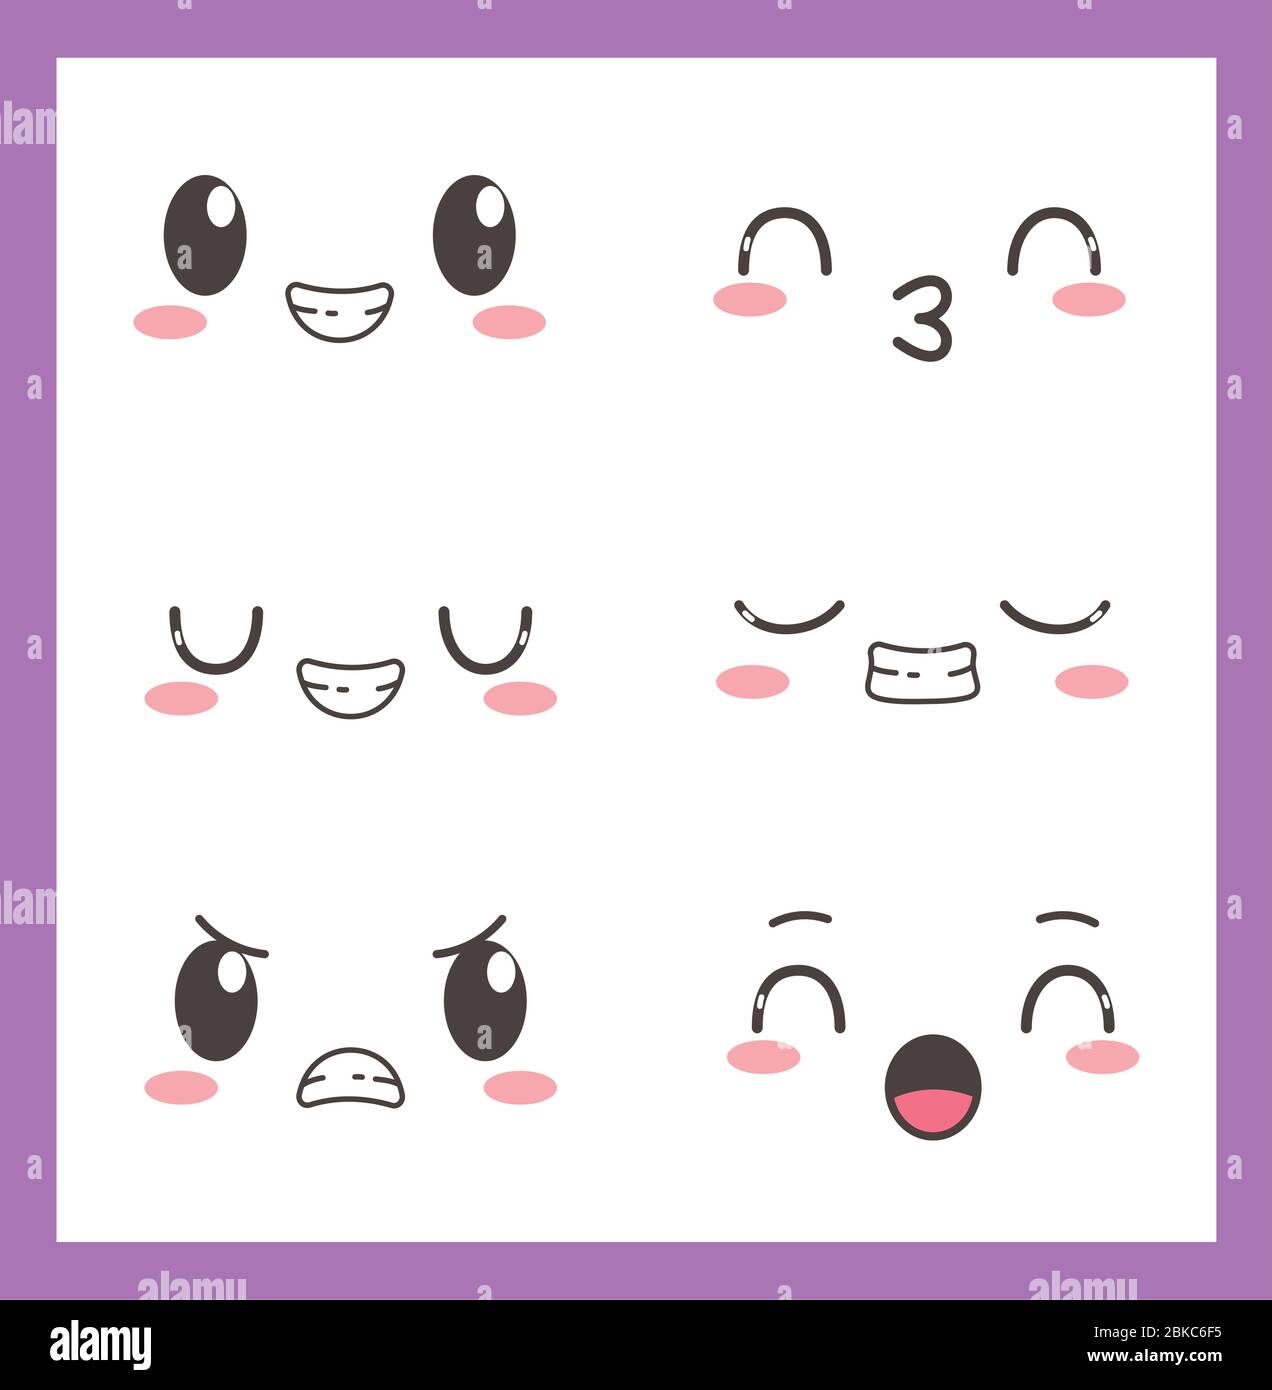 kawaii adorable adorables ojos boca expresiones faciales vector ilustración  Imagen Vector de stock - Alamy